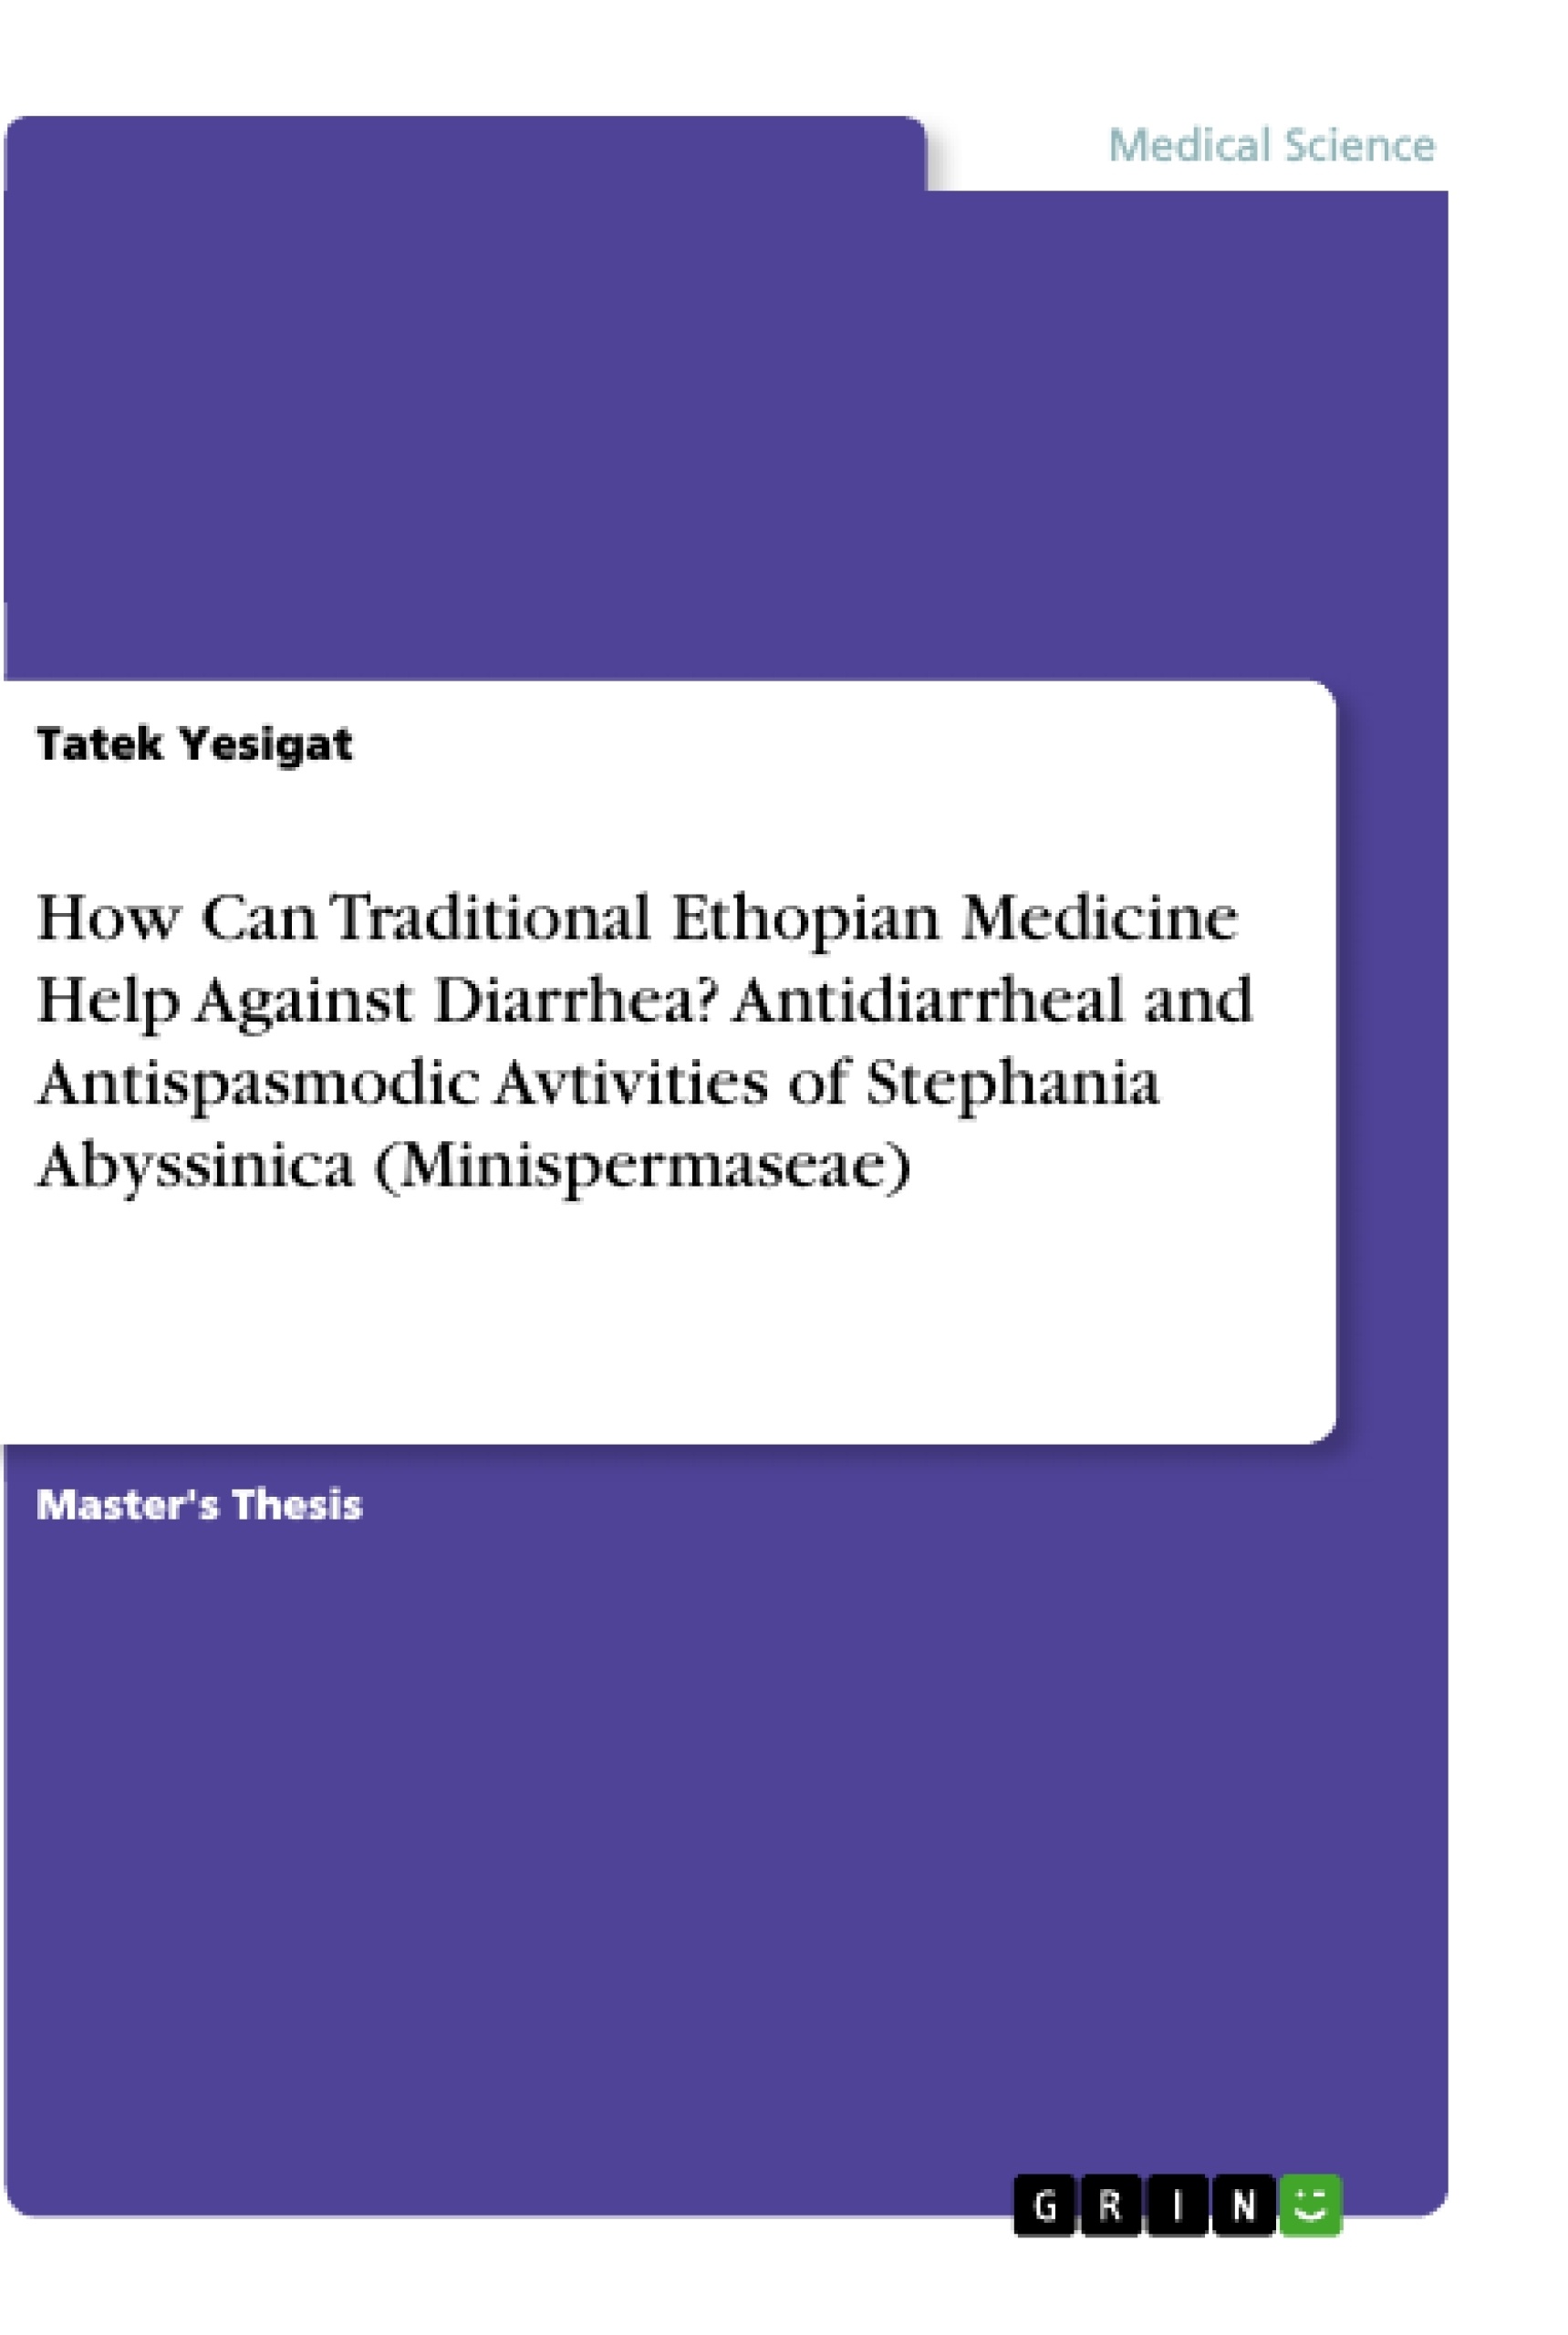 Title: How Can Traditional Ethopian Medicine Help Against Diarrhea? Antidiarrheal and Antispasmodic Avtivities of Stephania Abyssinica (Minispermaseae)